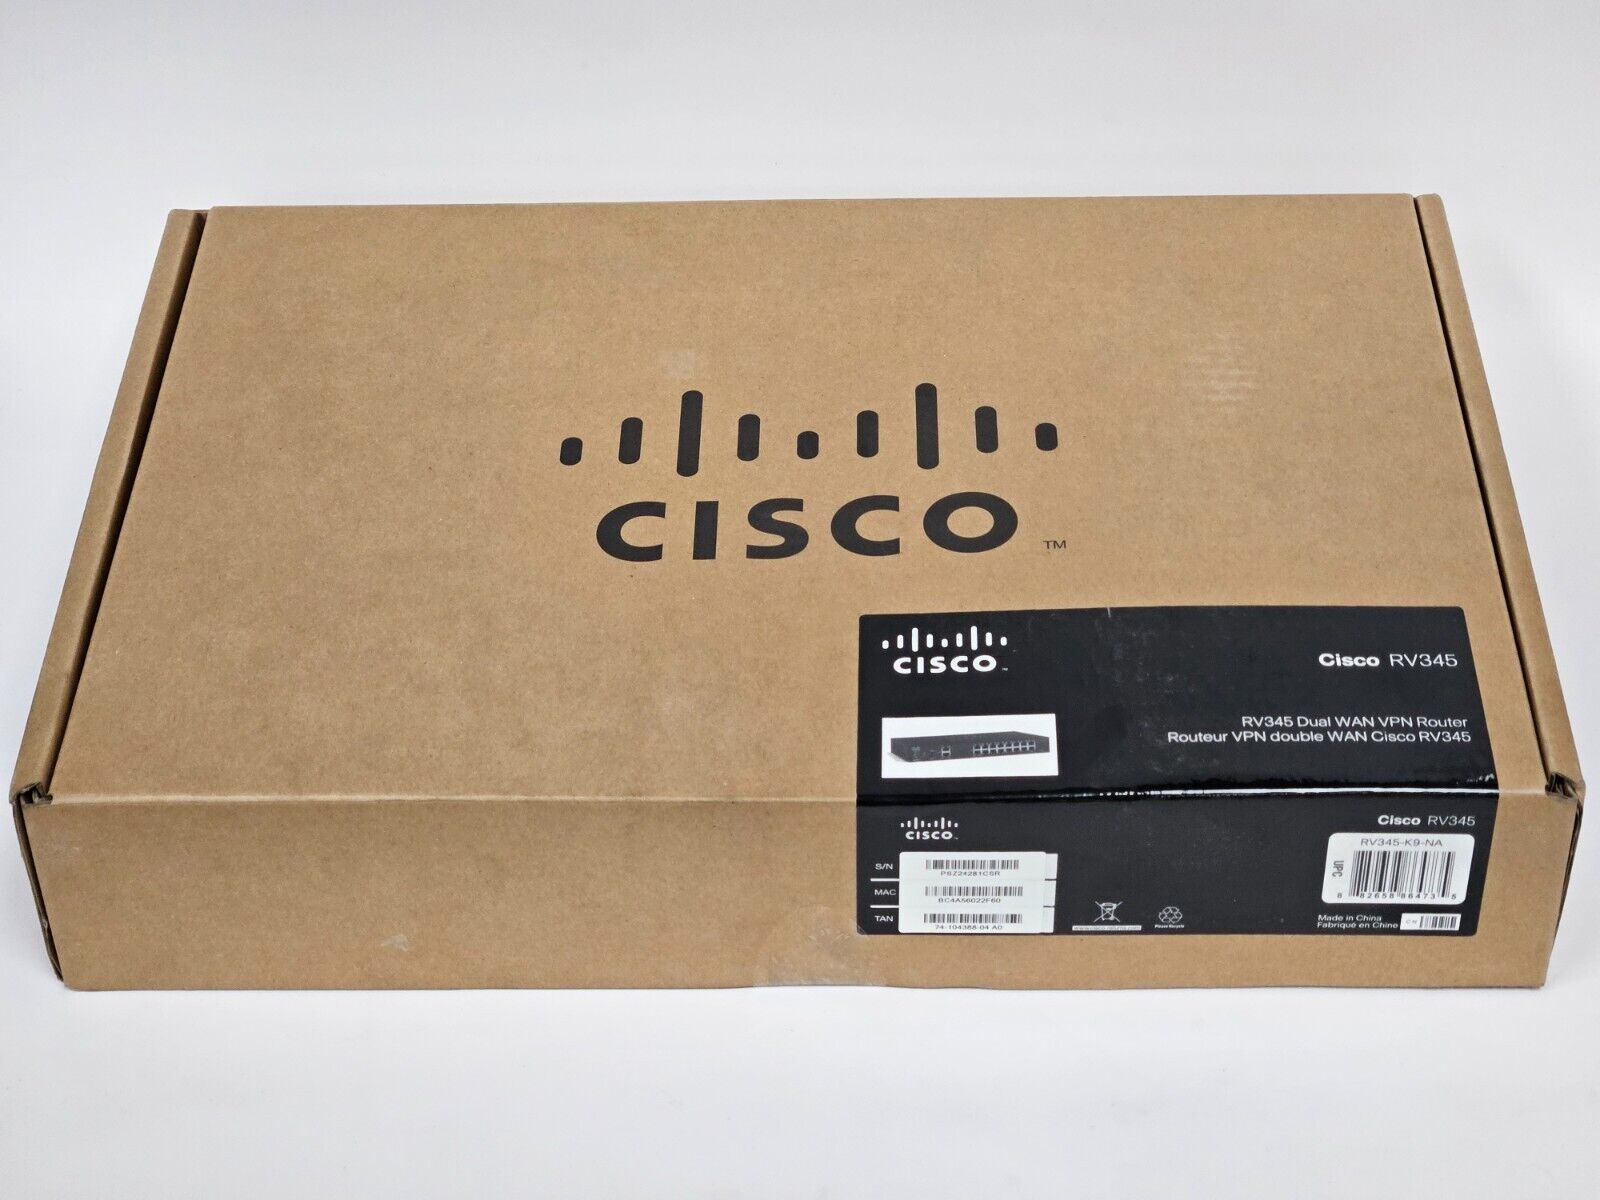 Cisco RV345 Dual WAN Gigabit VPN Router - NEW IN BOX